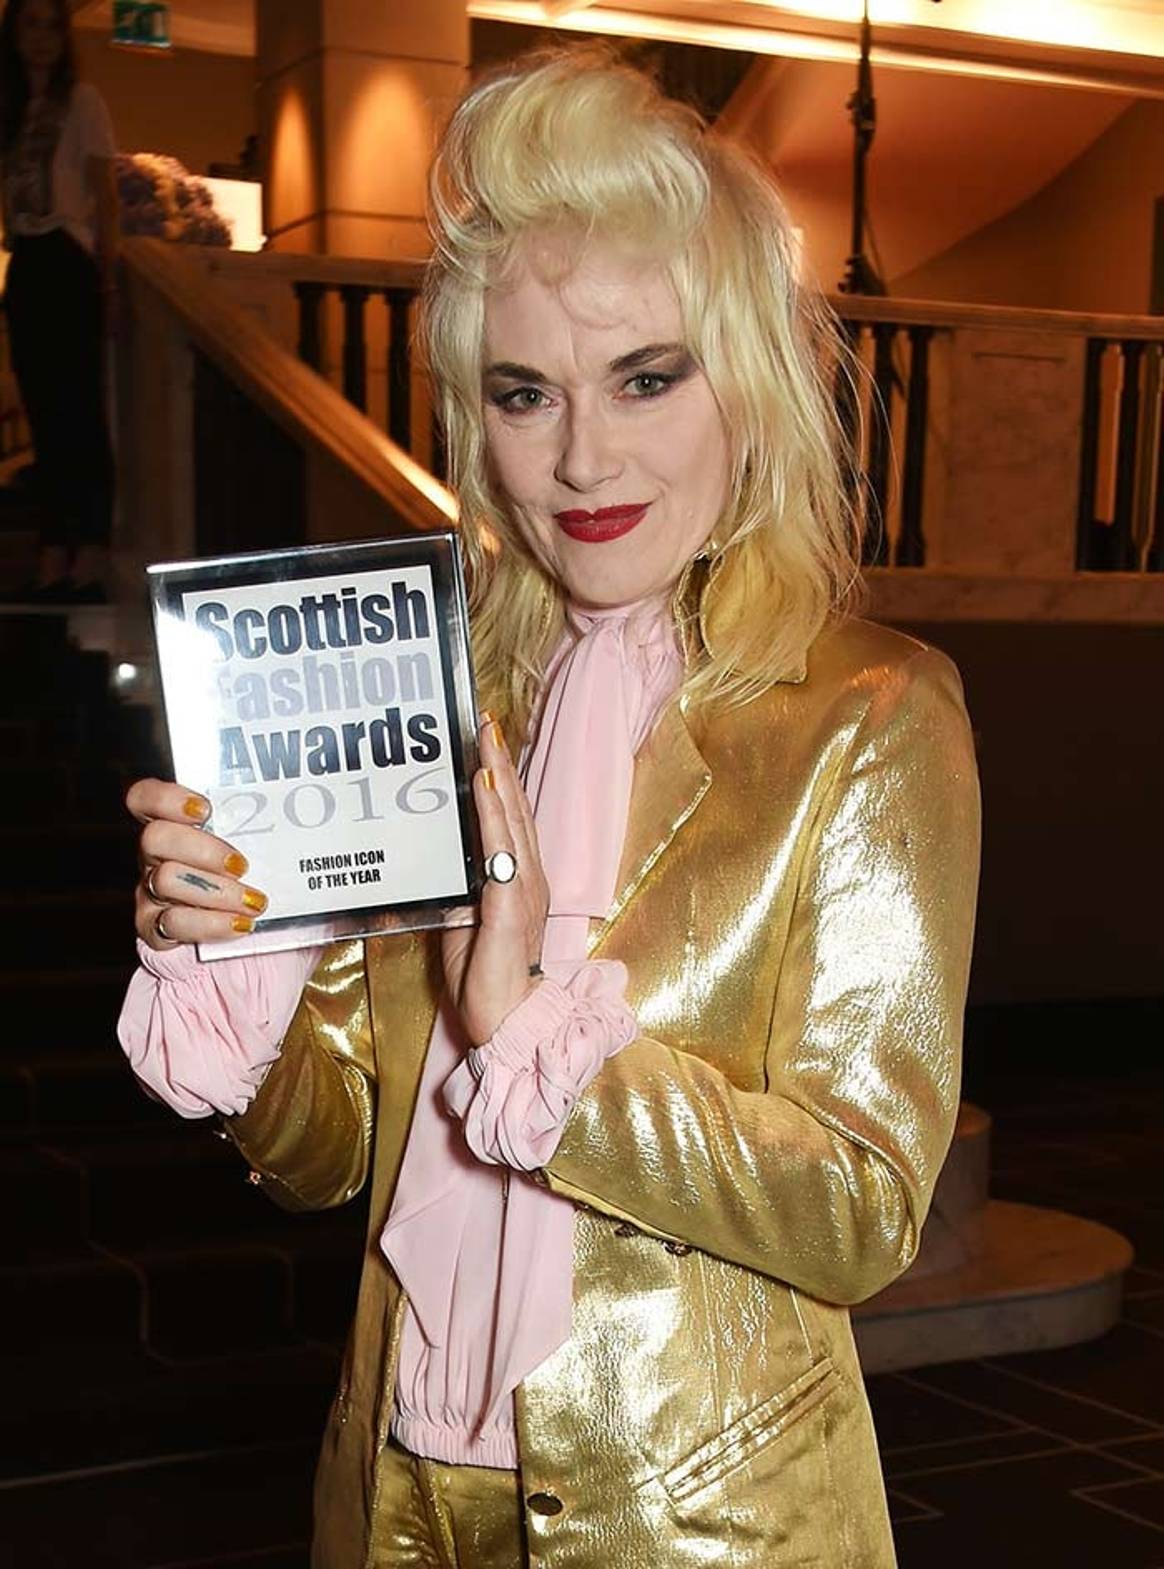 Scottish Fashion Awards winners announced